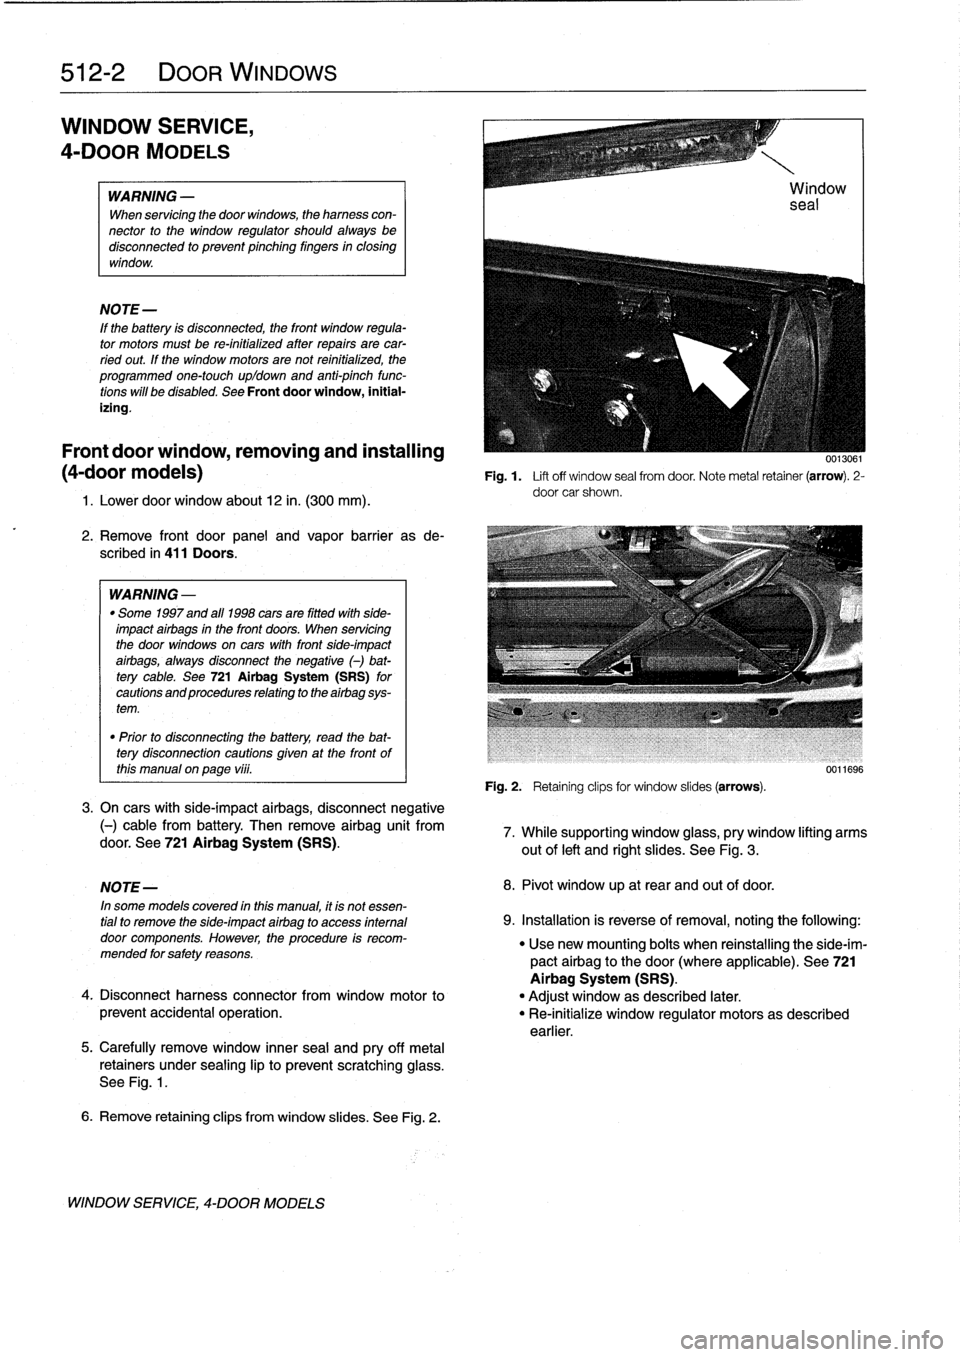 BMW 323i 1998 E36 Workshop Manual 
512-2

	

DOOR
WINDOWS

WINDOW
SERVICE,

4-DOOR
MODELS

WARNING
-

When
servicing
the
door
wíndows,
theharness
con-
nector
to
the
window
regulator
shouldalways
be
disconnected
to
prevent
pinching
fi